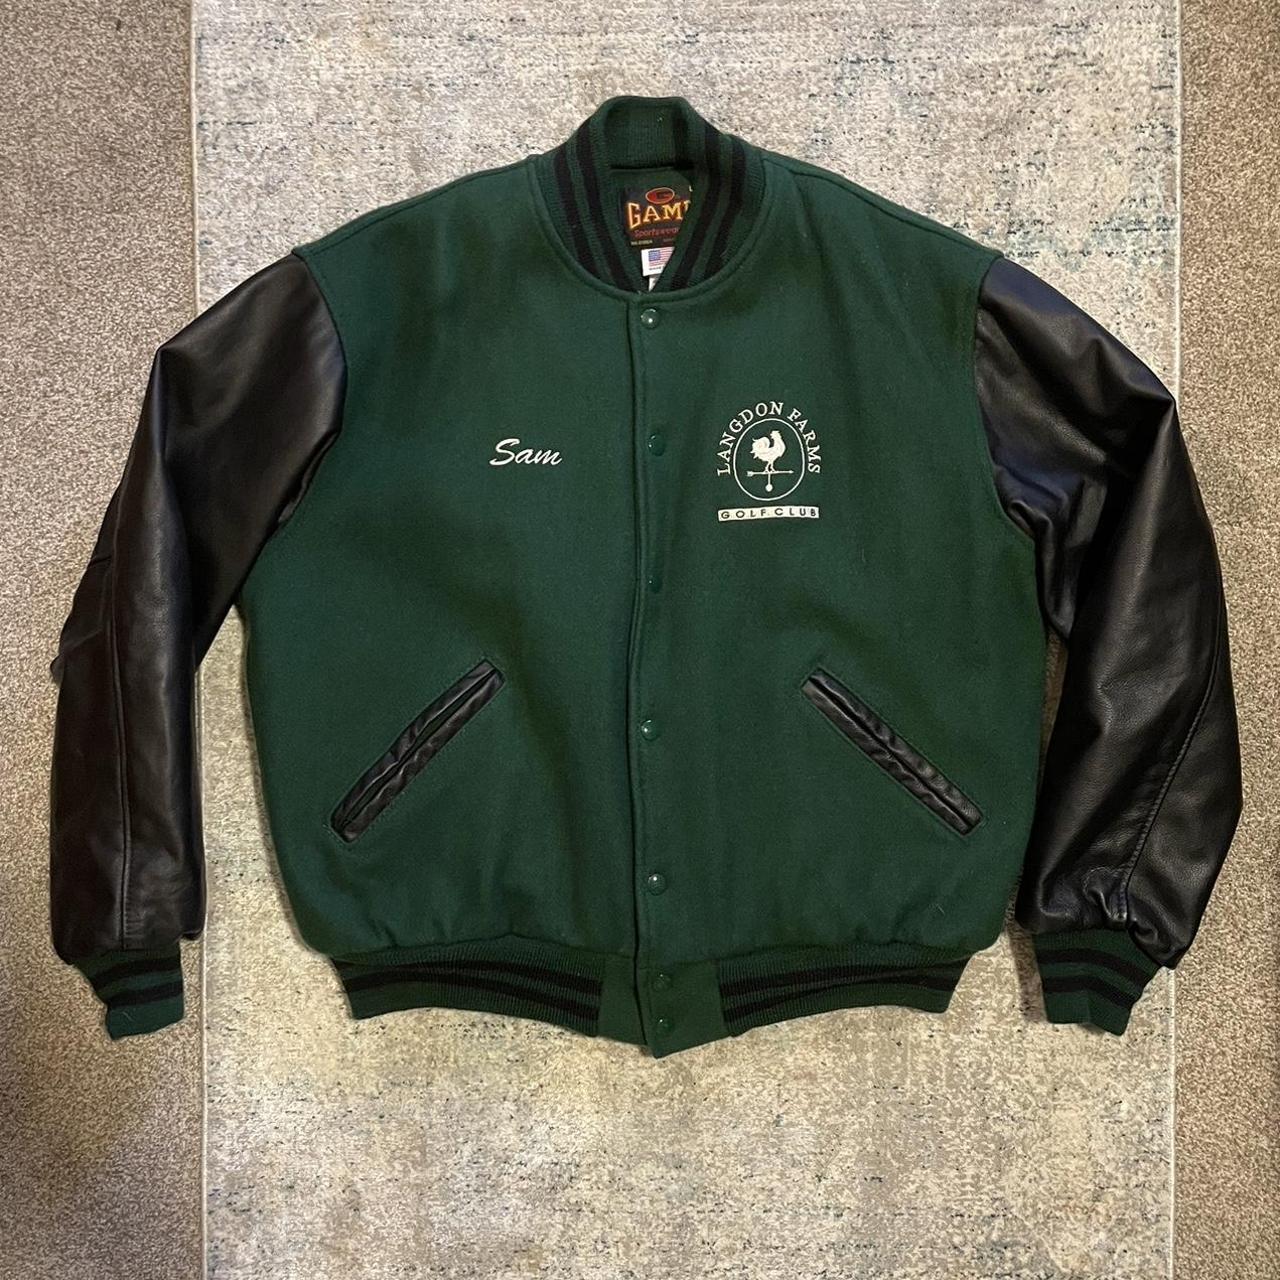 Vintage varsity jacket by game sportswear - golf... - Depop